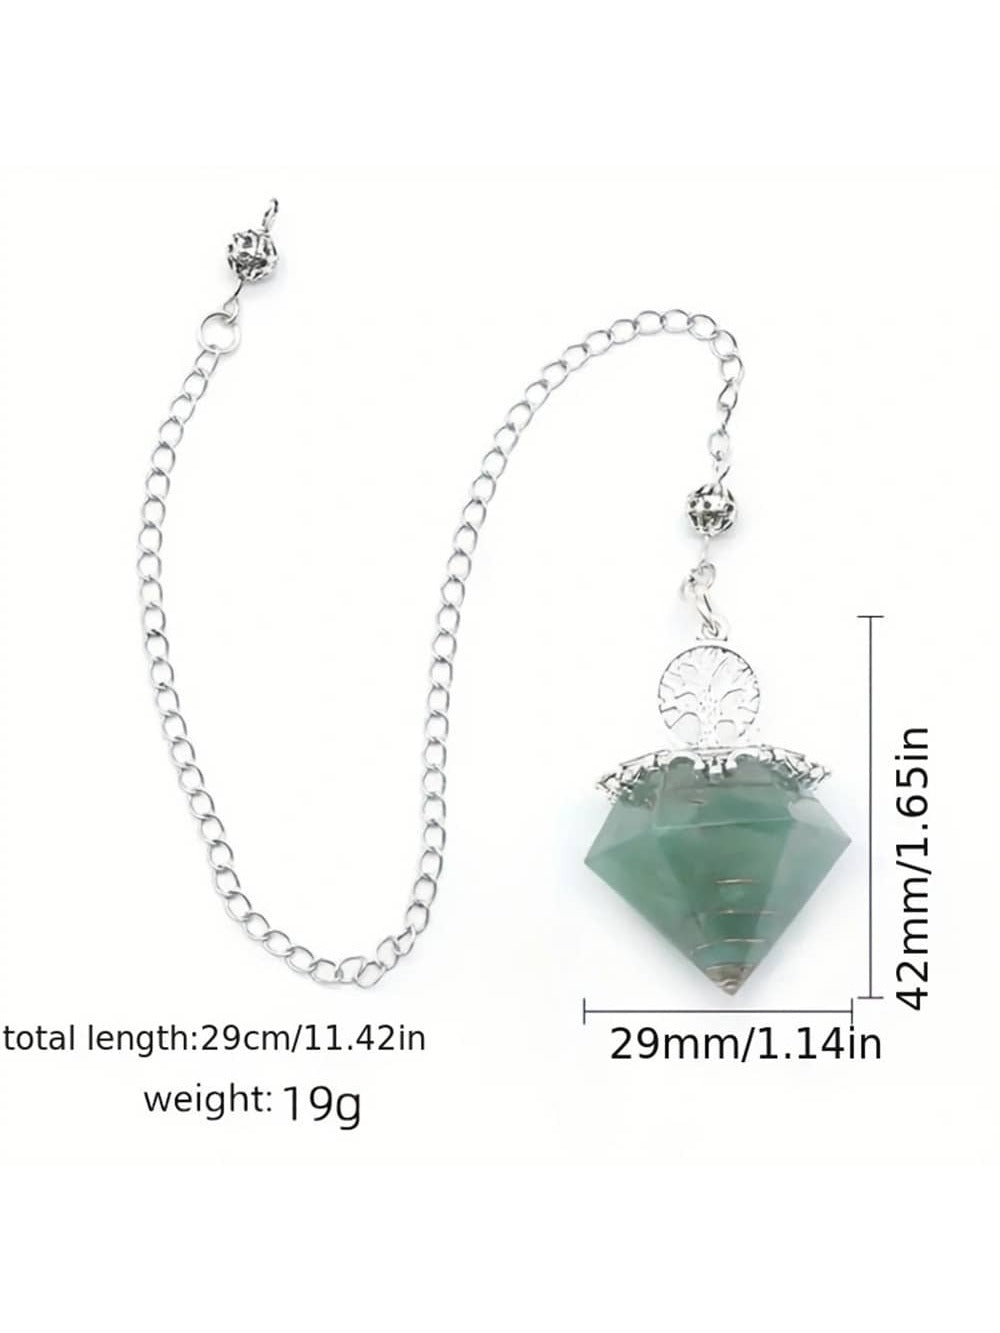 Goddess Rhinestone Pendulum Pendant with Natural Crystal Quartz 1pc